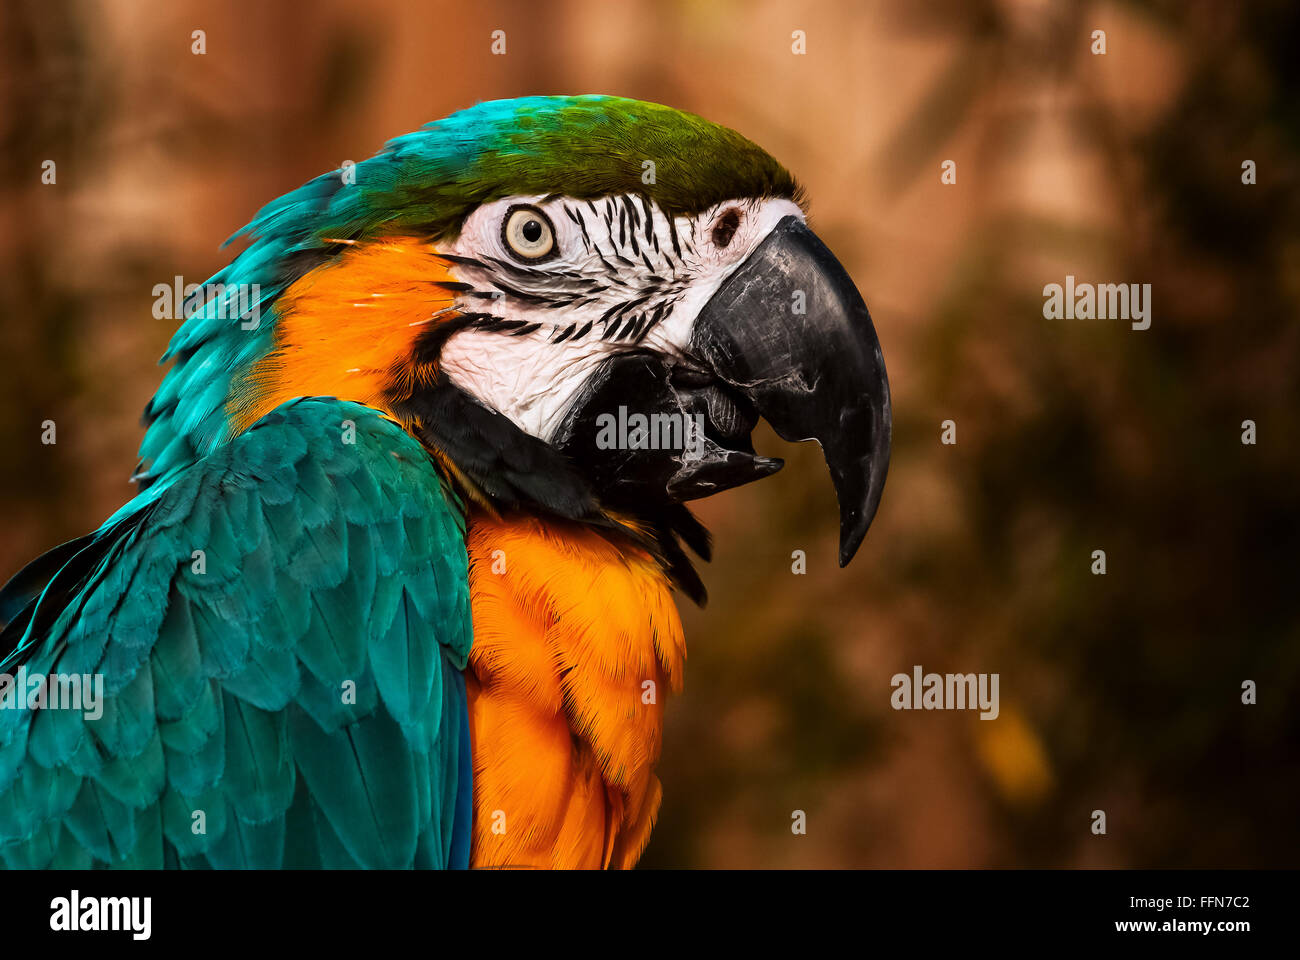 Blue green orange macaw talking parrot portrait closeup Stock Photo